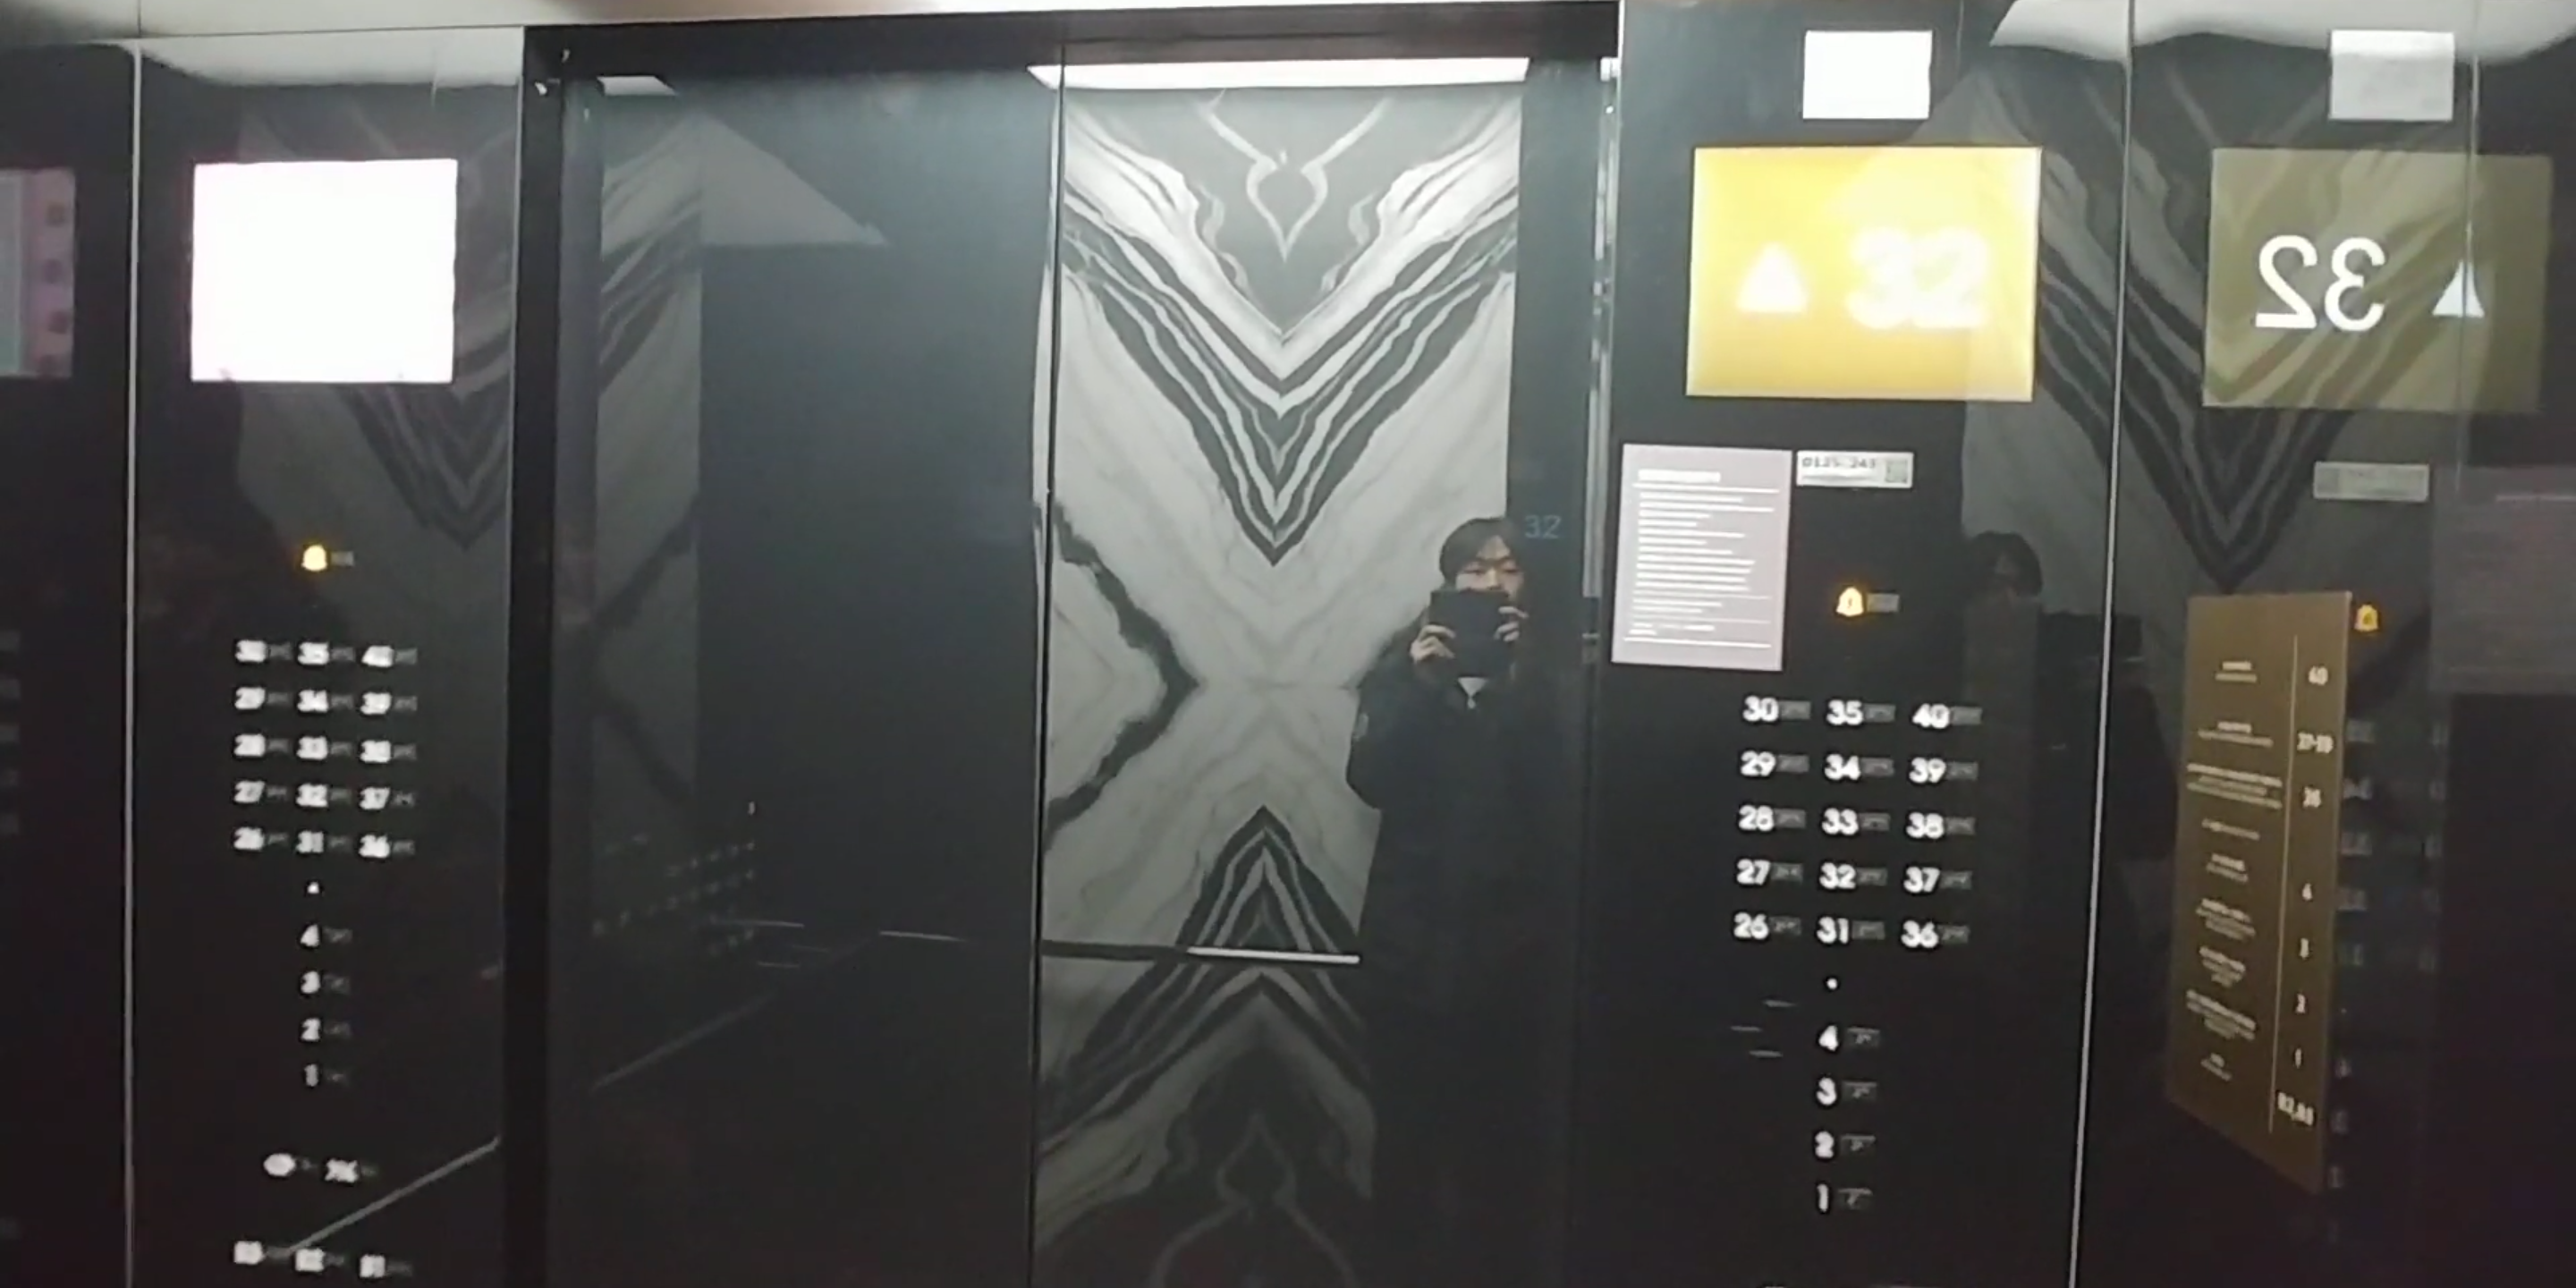 Screenshot_20200113-141231.png : 드래곤시티 호텔에 있는 멋진 엘리베이터 보고 맞구독해요